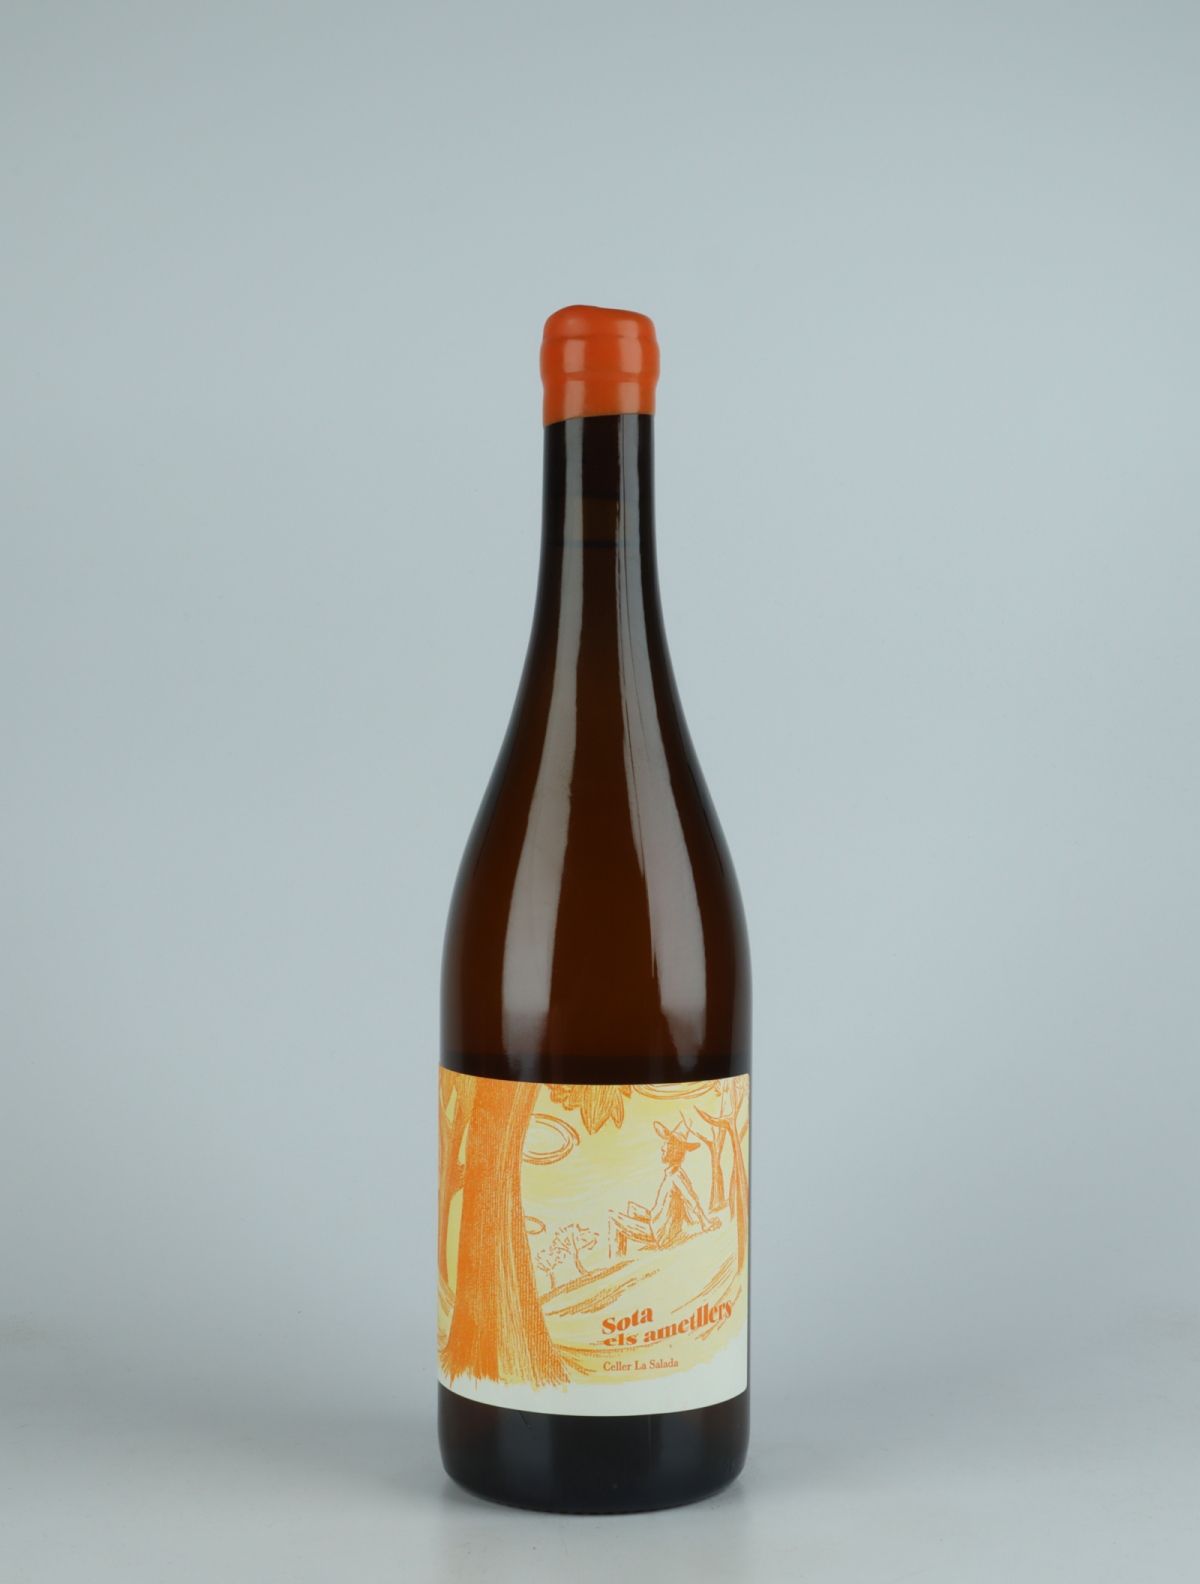 A bottle 2021 Sota Els Ametllers Orange wine from Celler la Salada, Penedès in Spain